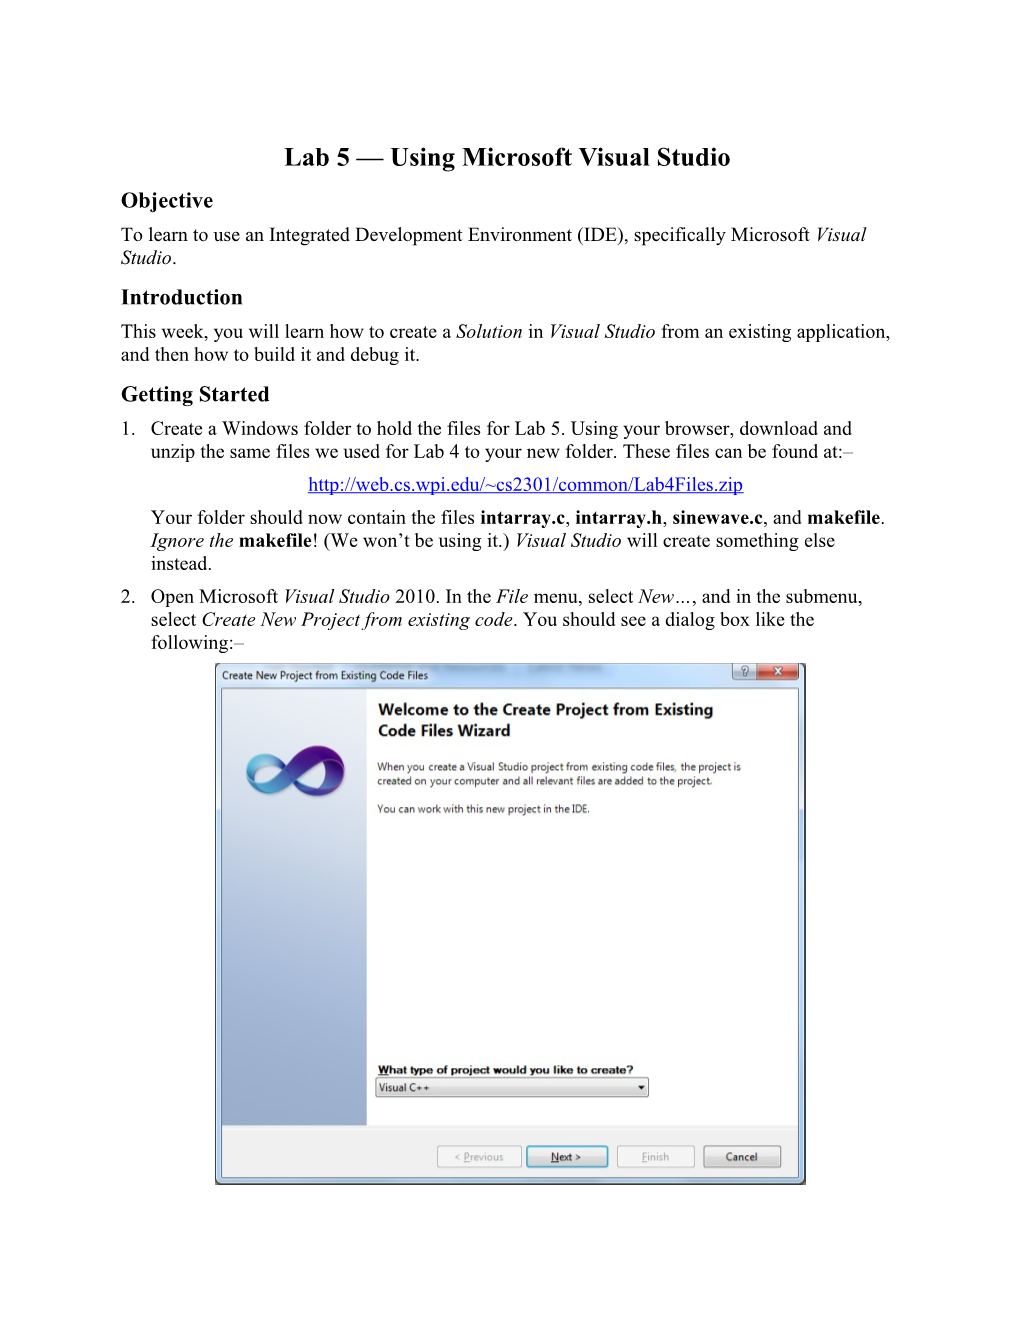 Lab Assignment #5 Using Microsoft Visual Studio